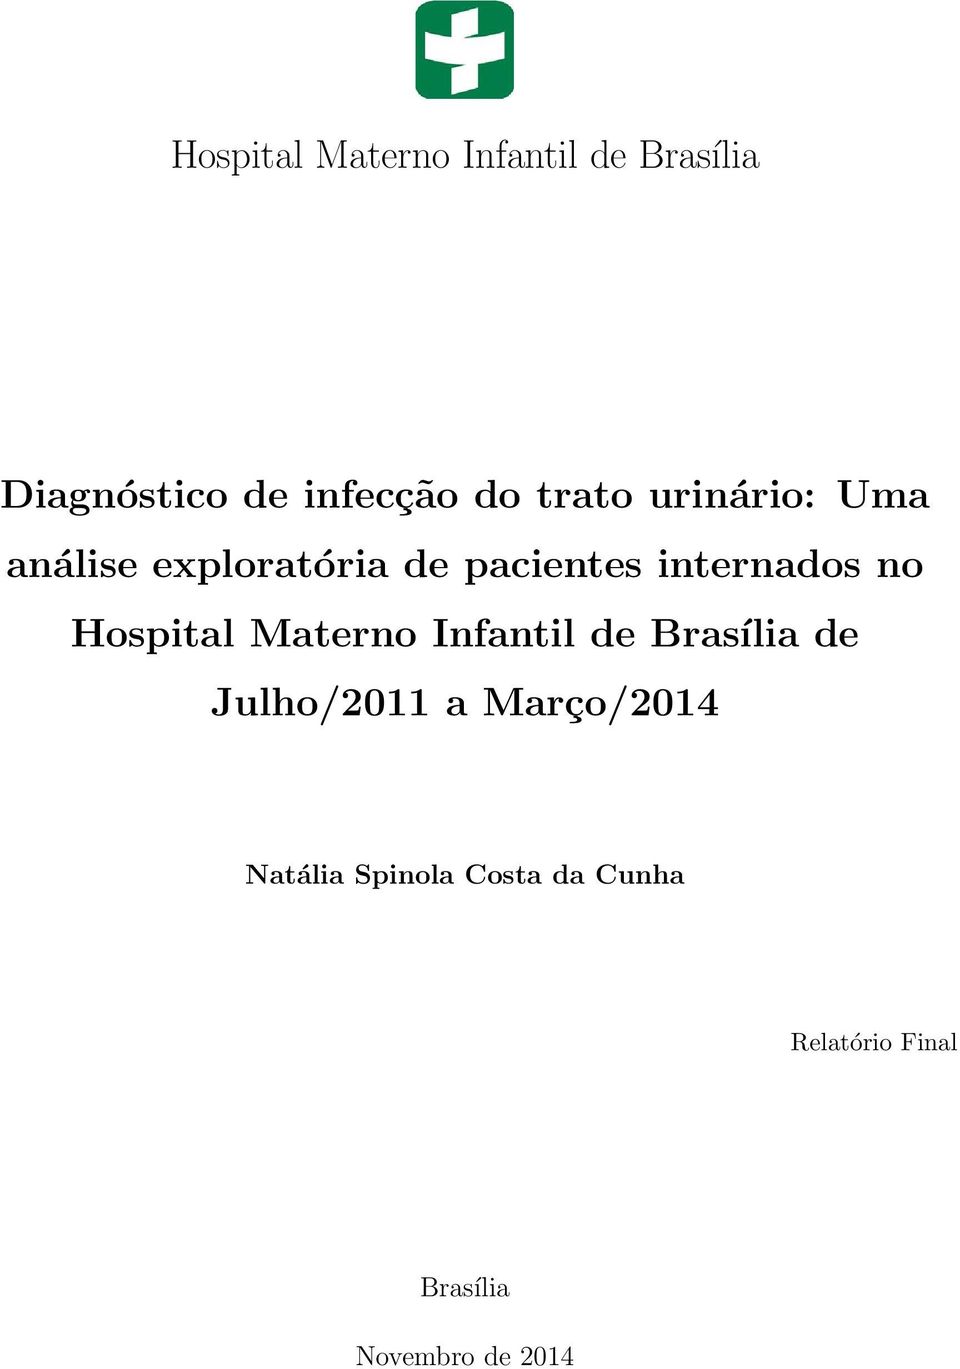 Hospital Materno Infantil de Brasília de Julho/2011 a Março/2014